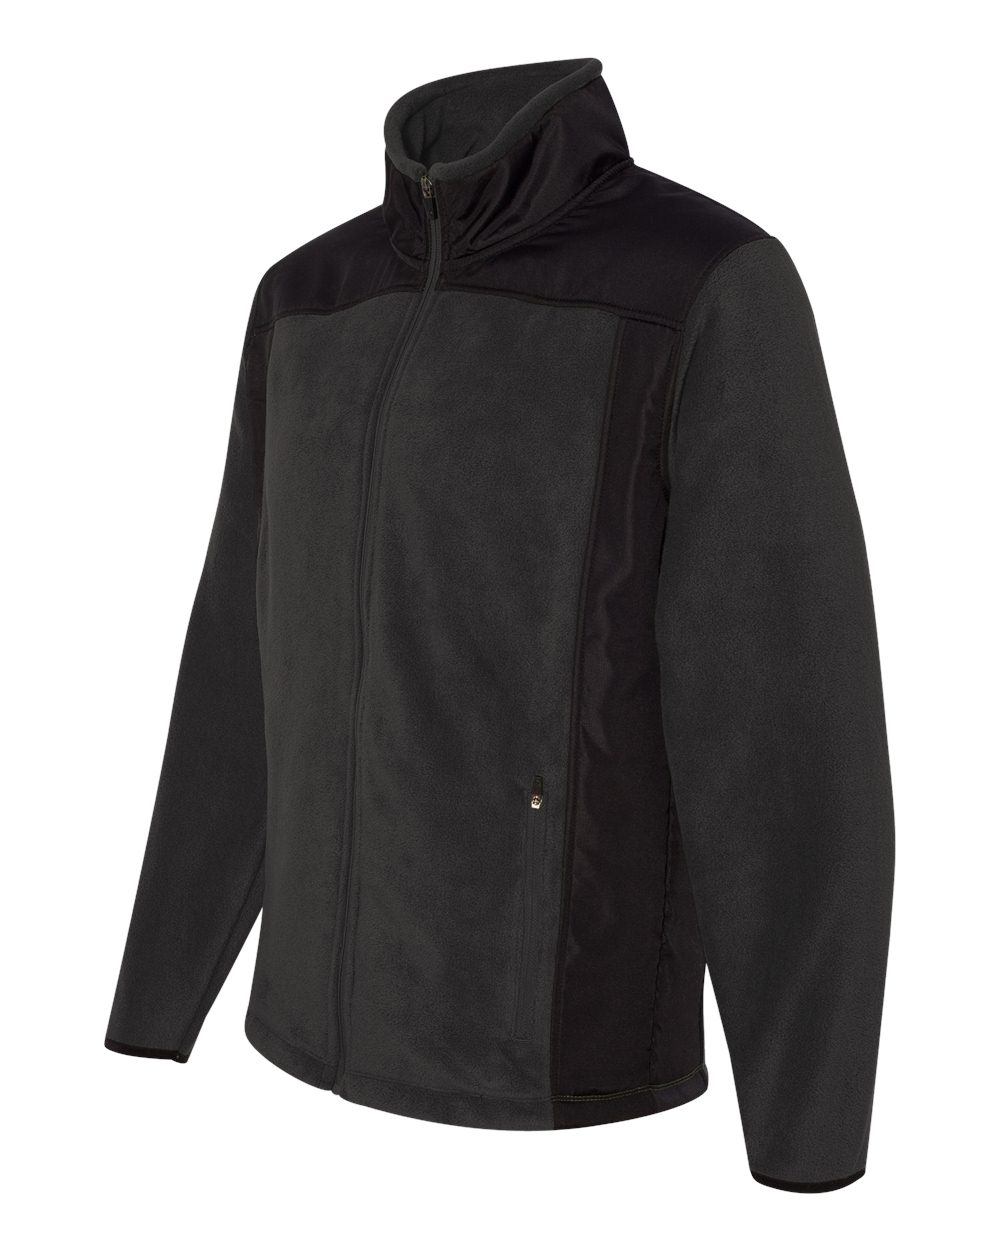 Colorado Clothing 7115 - Telluride Nylon/Polarfleece Jacket